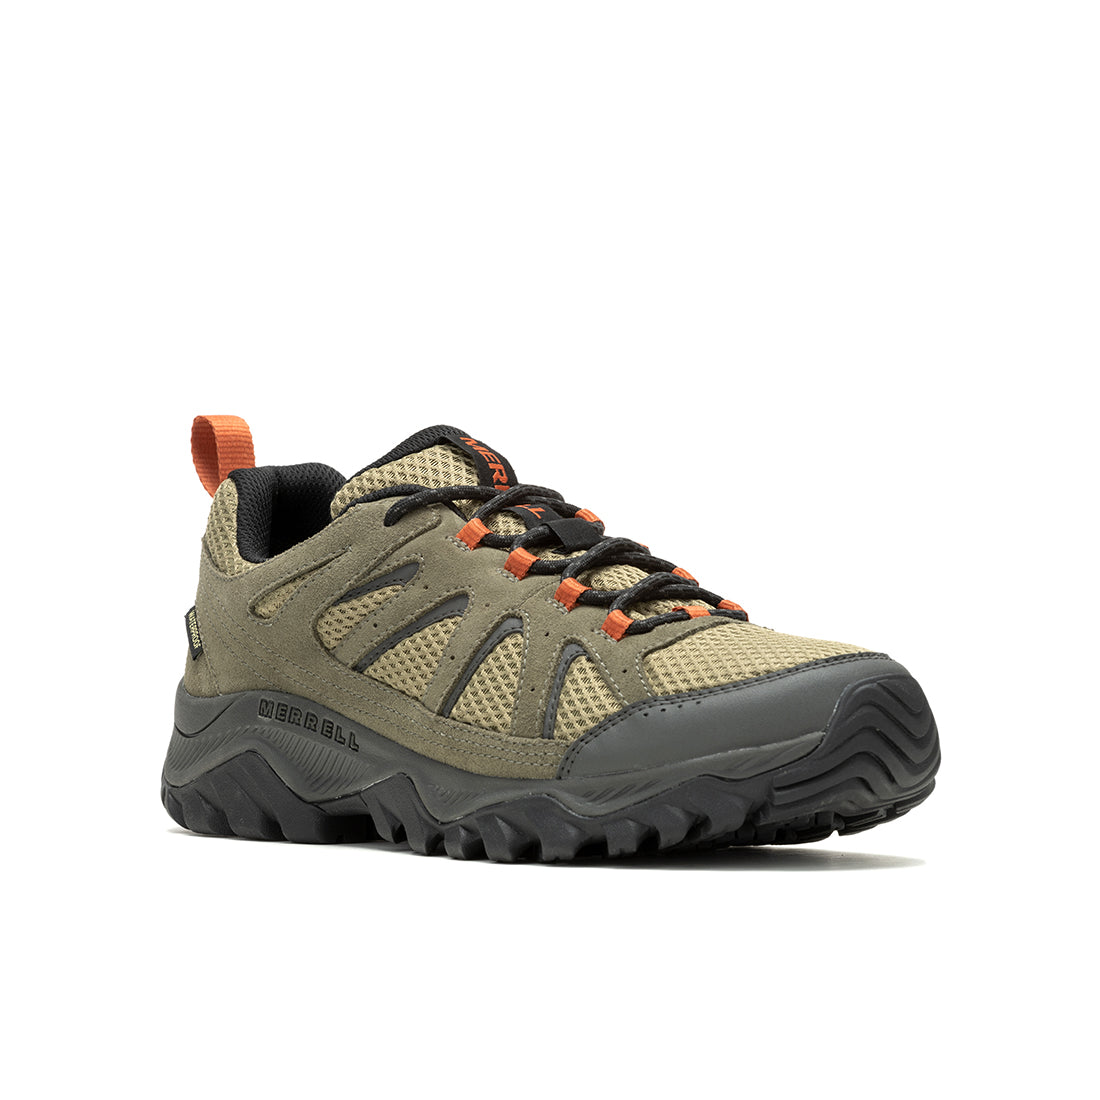 Oakcreek Waterproof-Olive/Clay Mens Hiking Shoes - 0